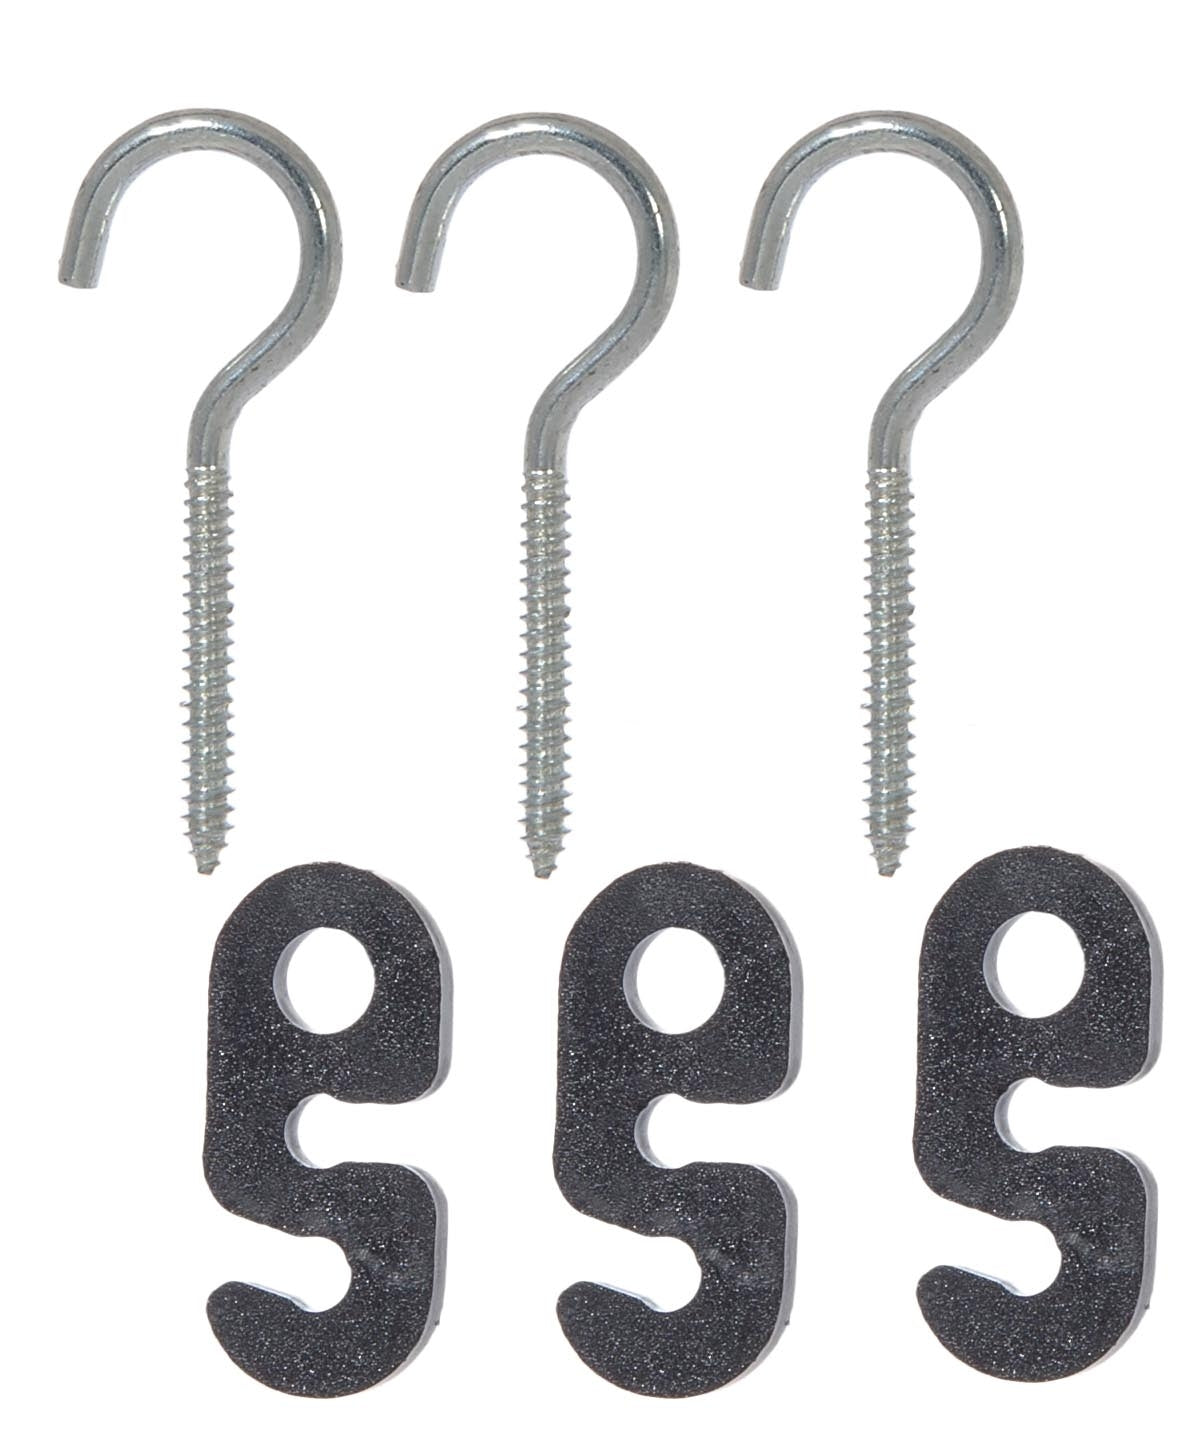 Screws and Plastic Wire Clip Set